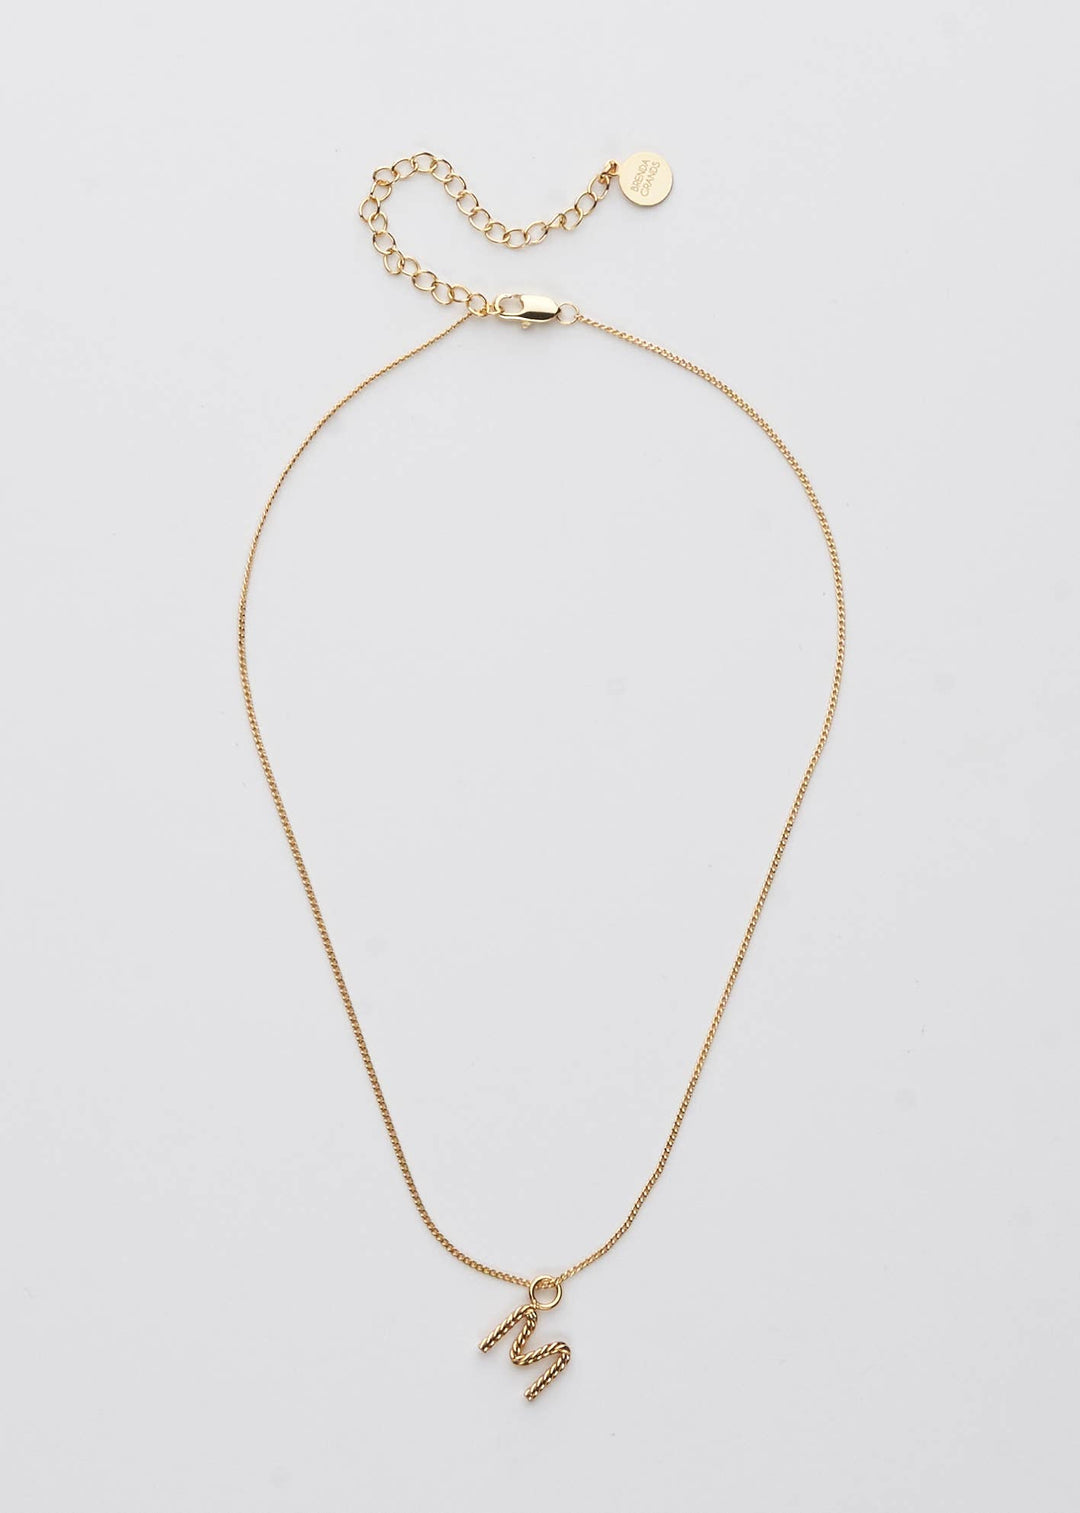 Aspen Initial Mini Necklace: Holiday Favorite!: J / 14"+3"